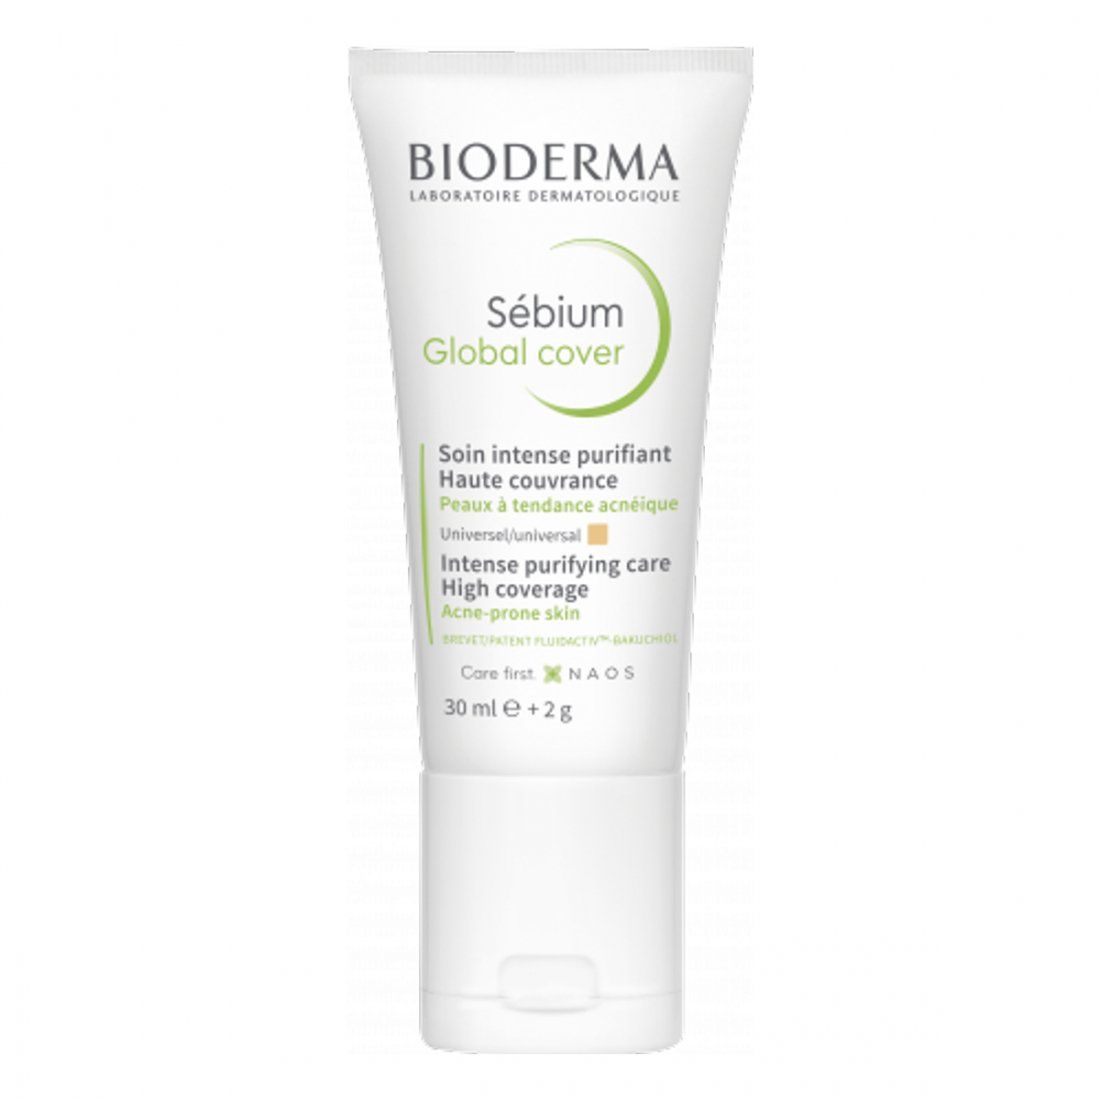 Bioderma - Crème visage 'Sébium Global Cover' - 30 ml